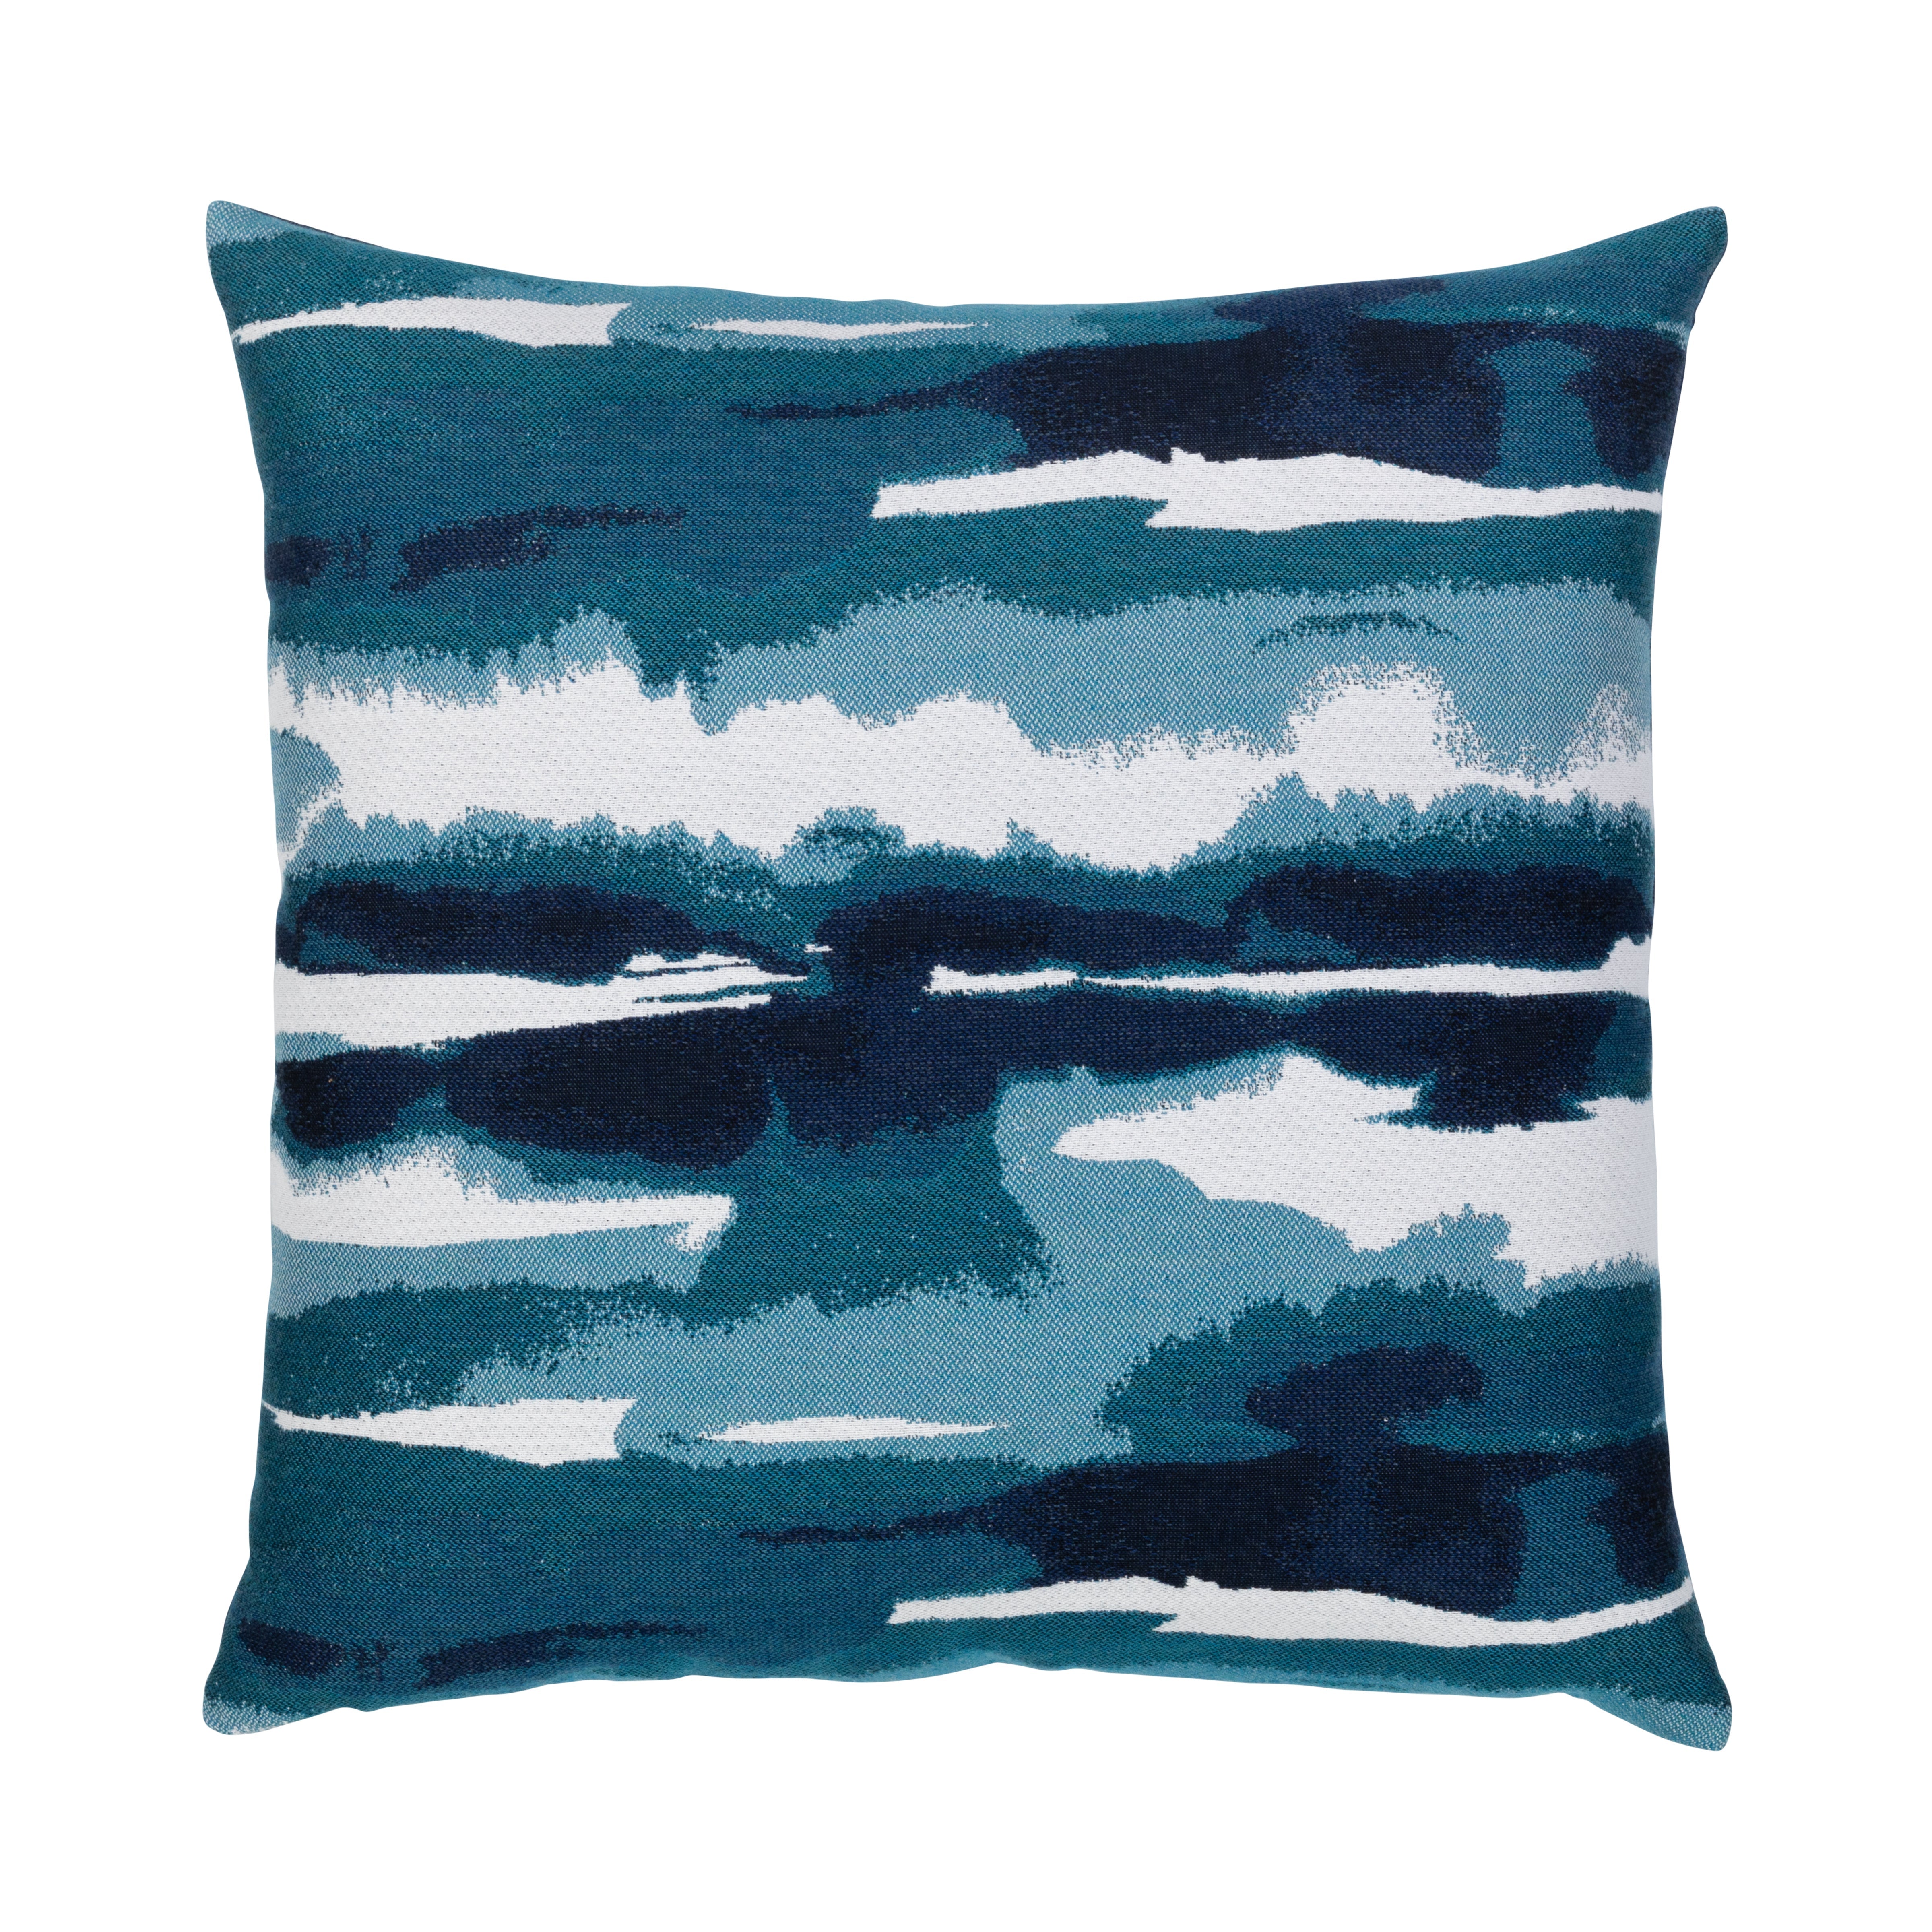 Elaine Smith Impression Deep Sea 22 inch Square Pillow Throw Pillows 12041439